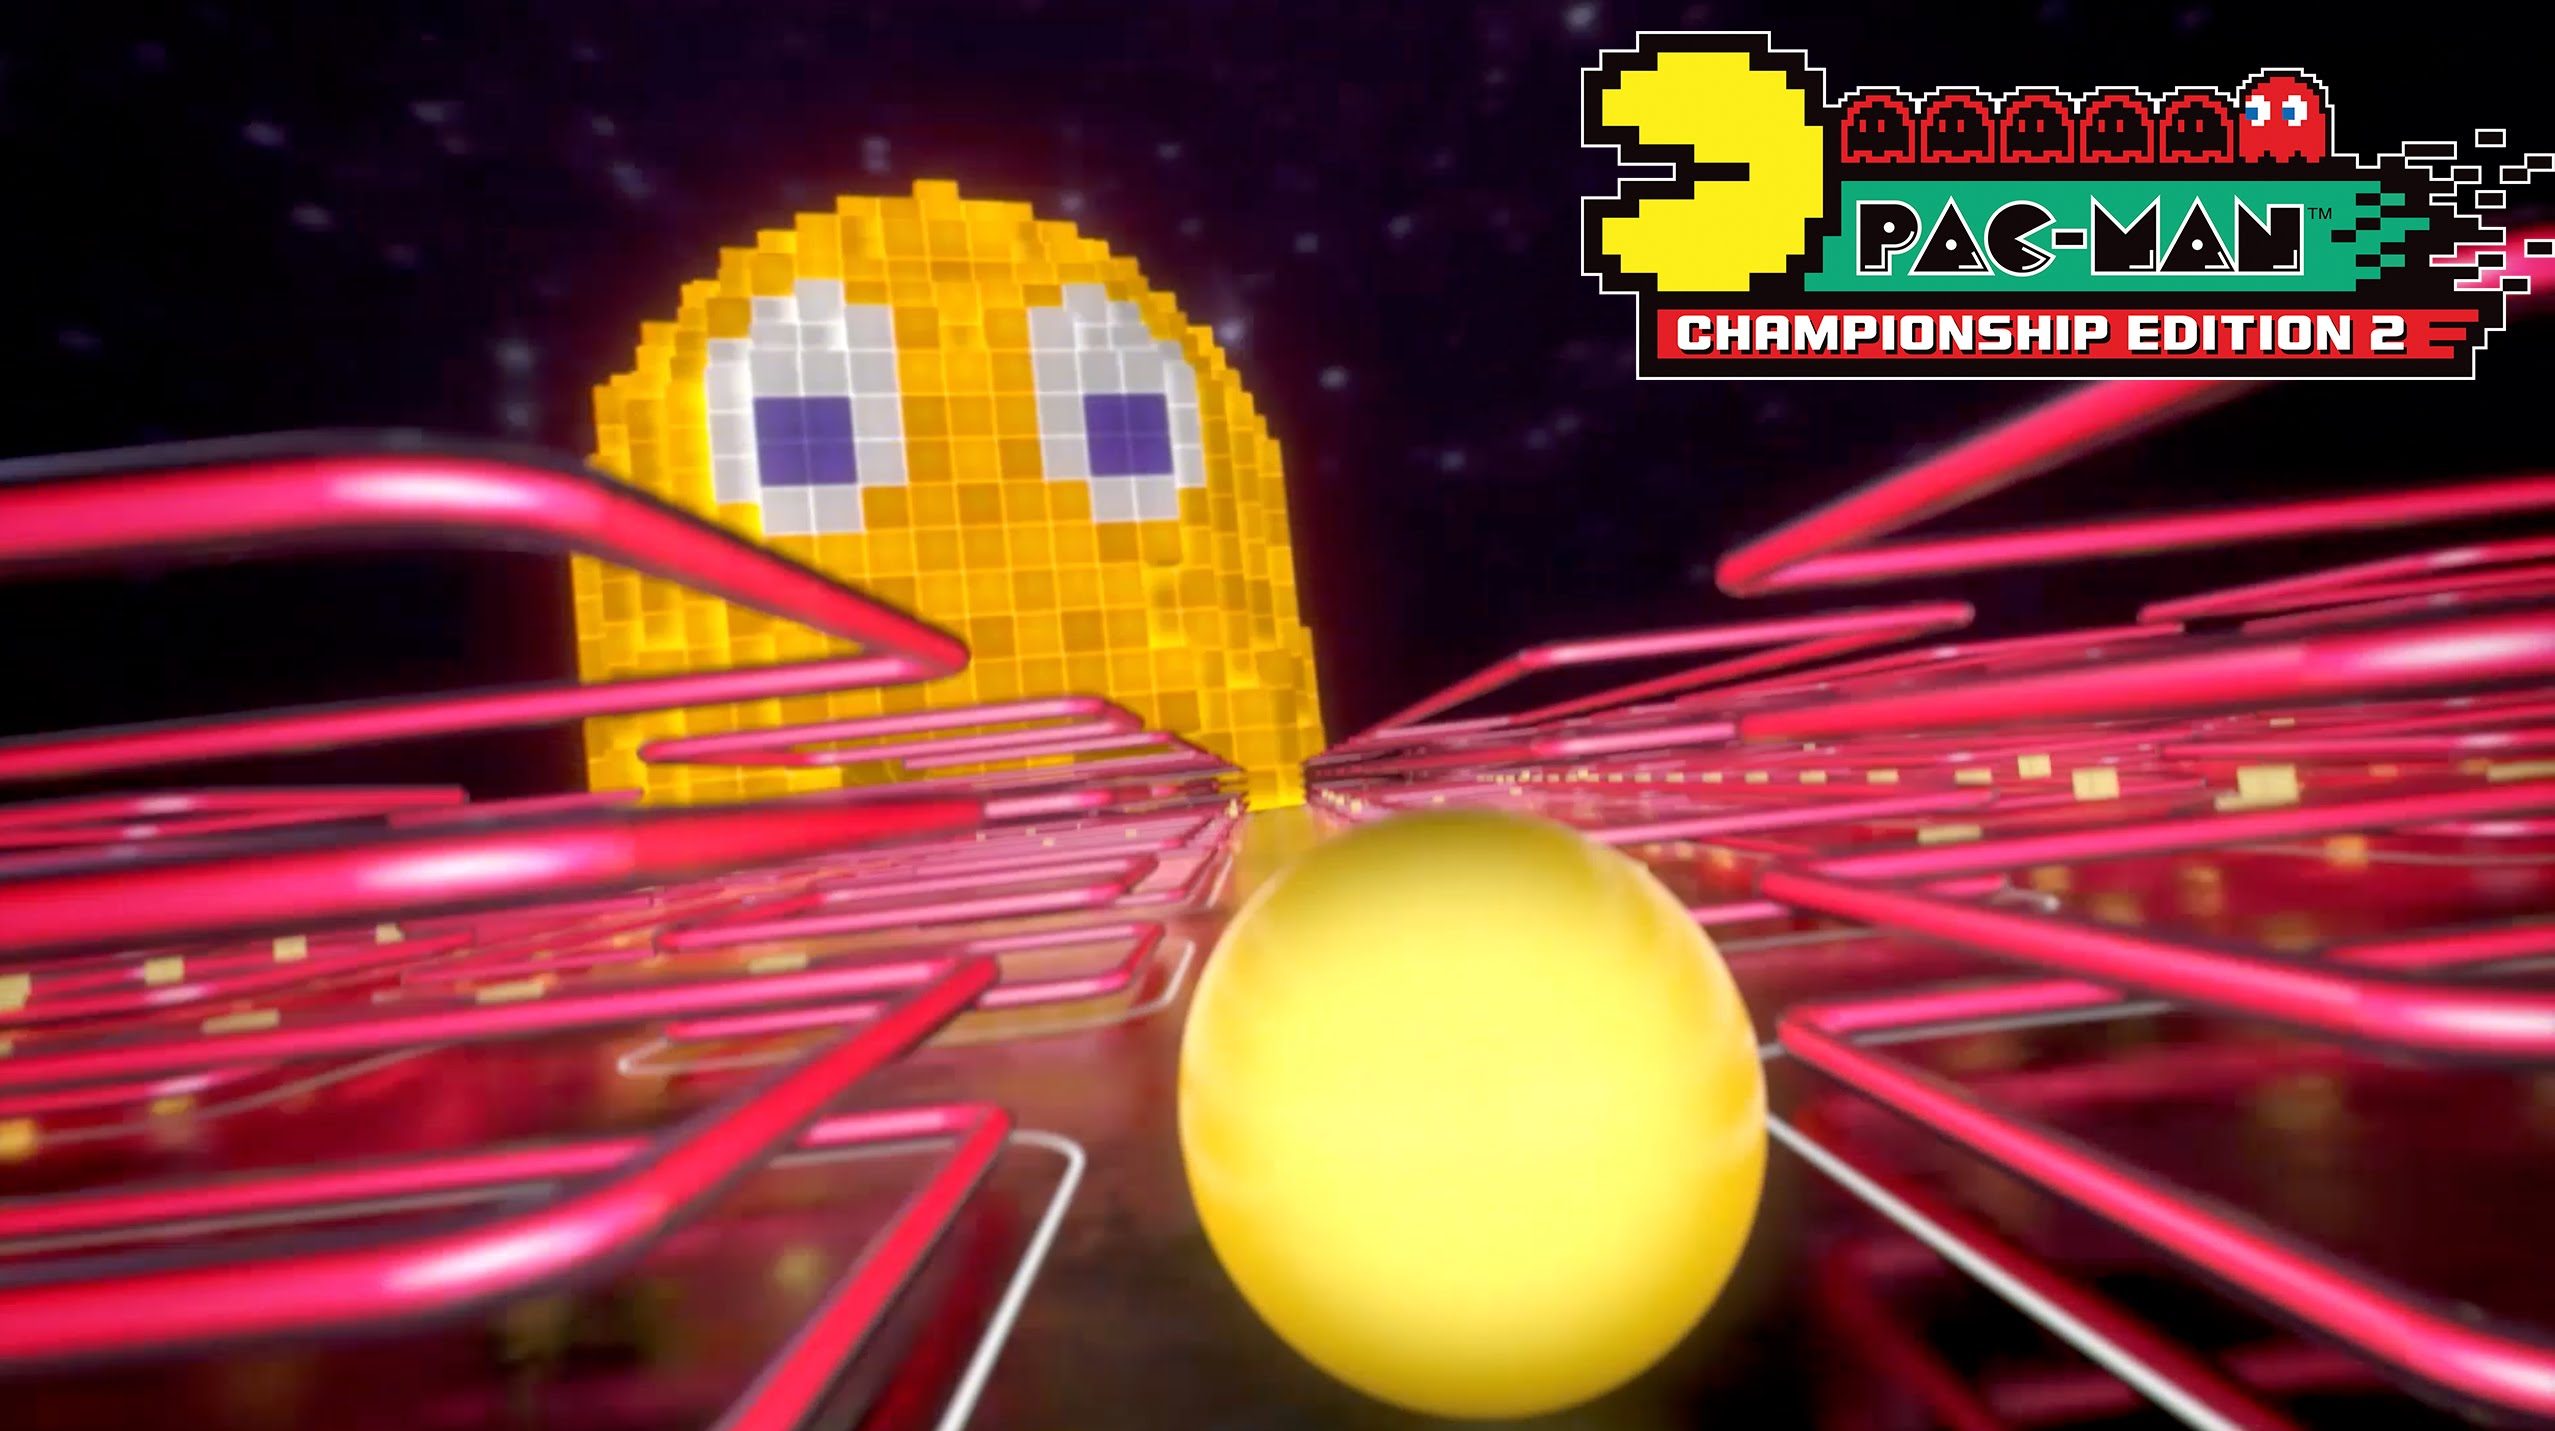 Pac man championship. Pacman 2 Championship Edition 2. Pac-man Championship Edition 2 + Arcade game Series. Ps4 Pacman. Pac man Championship Edition DX+.